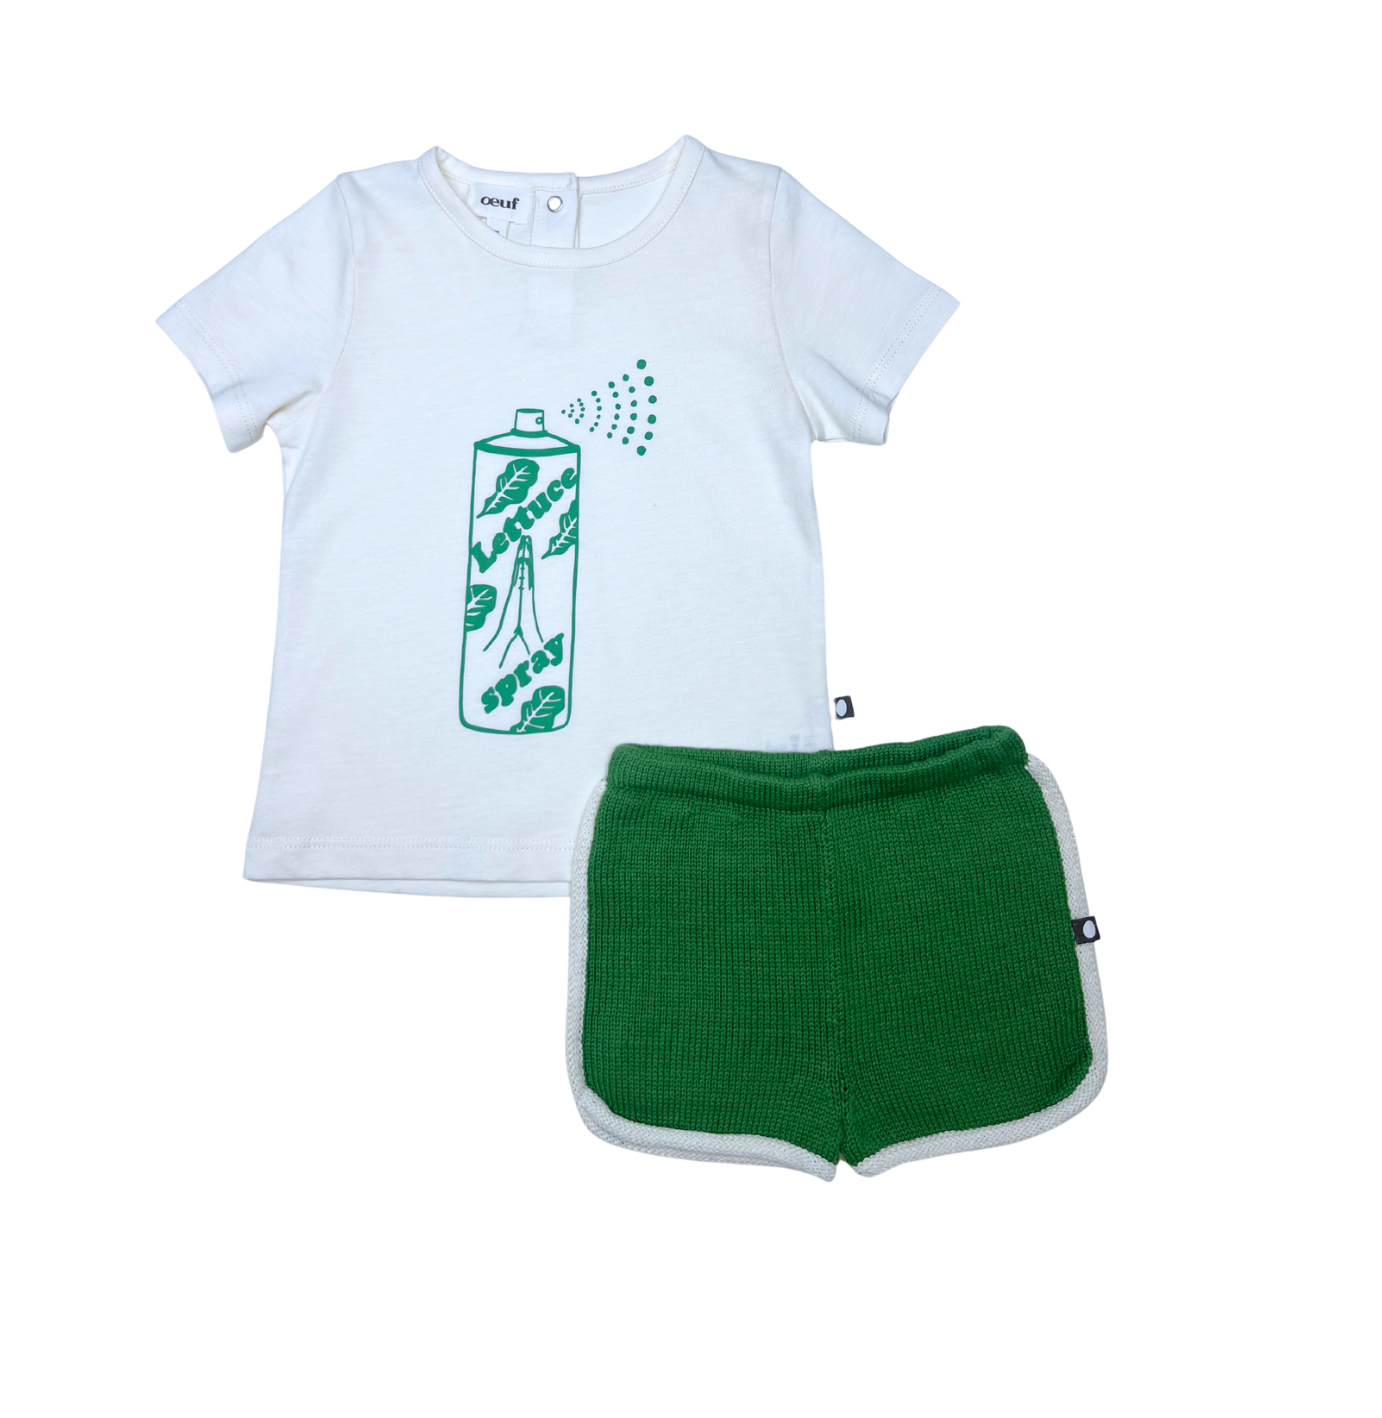 OEUF NYC - Ensemble T-shirt "lettuce spray" & short vert & blanc en maille - 12 mois